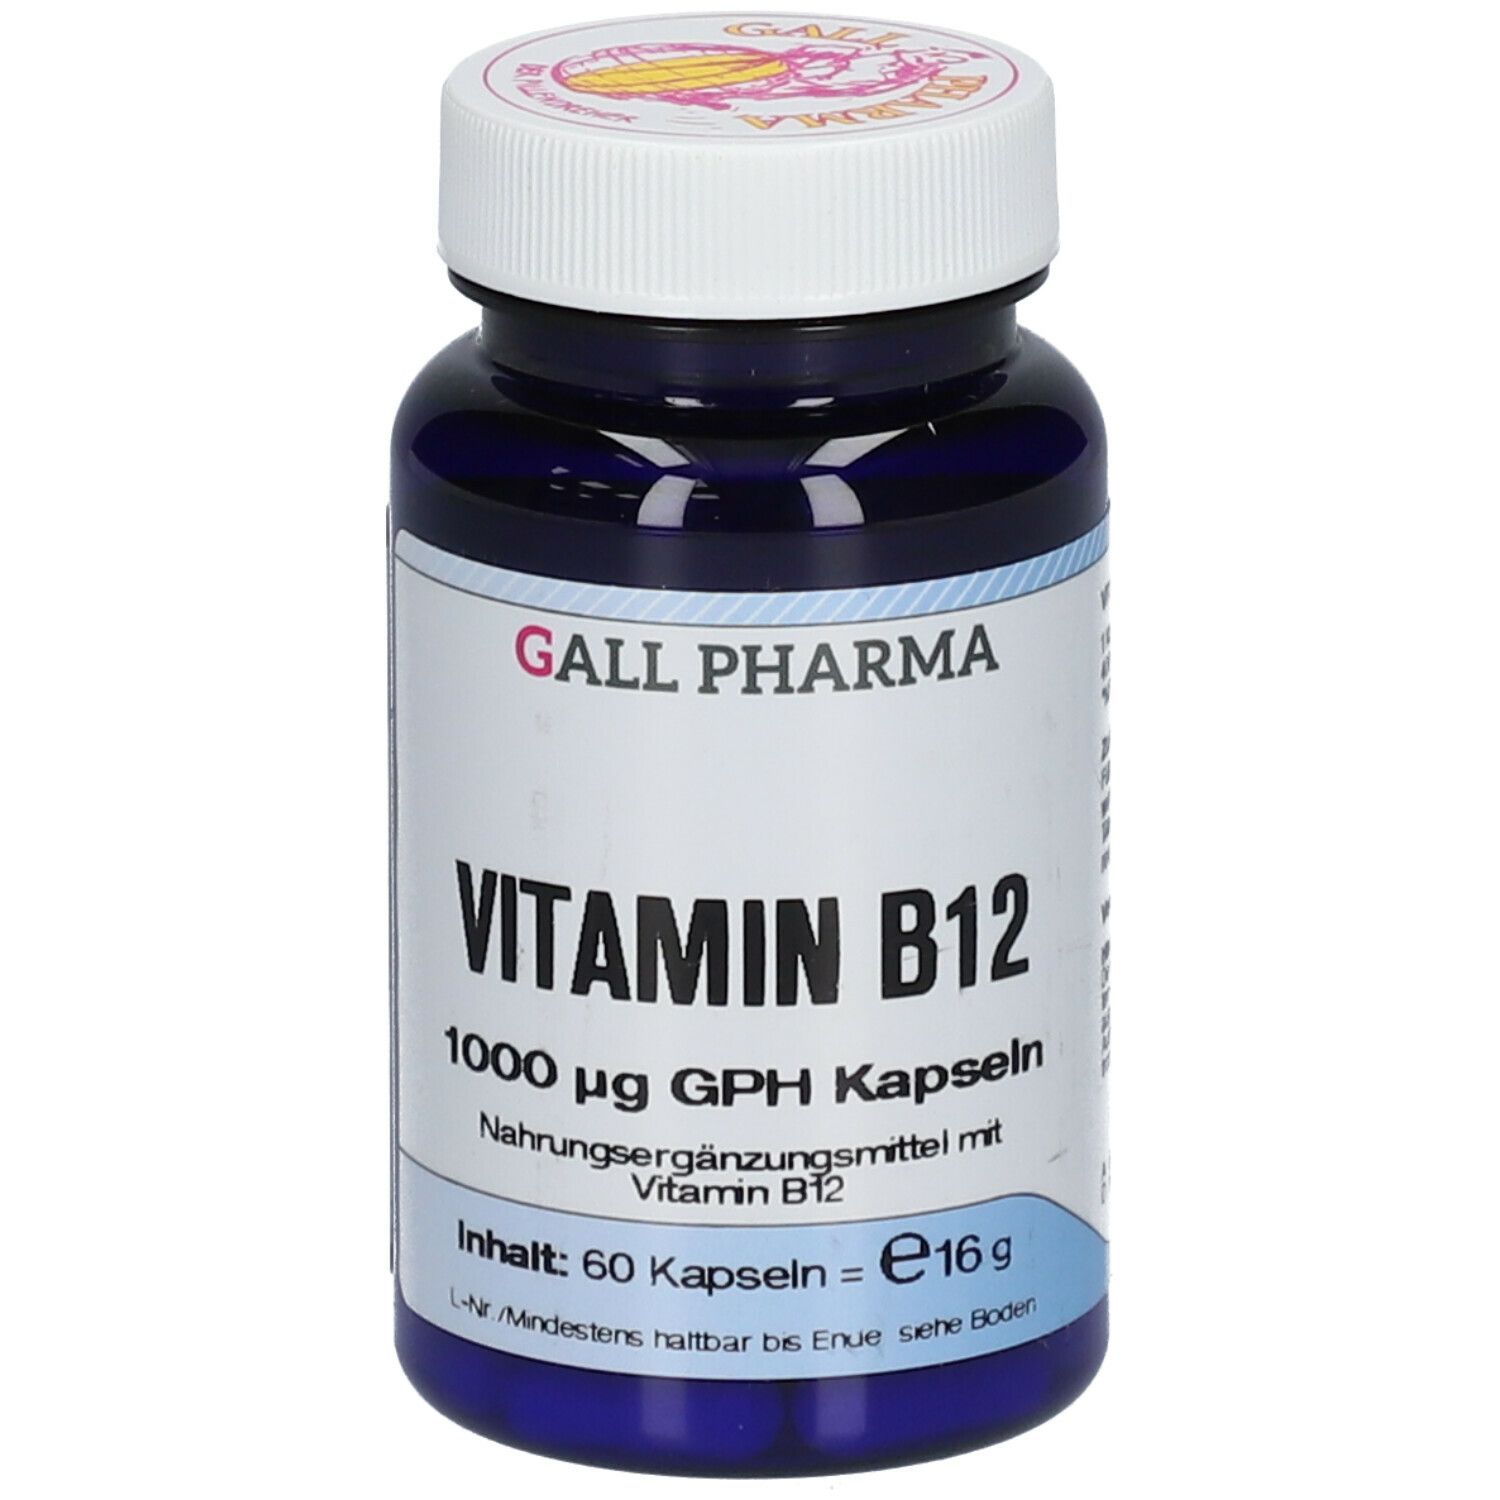 GALL PHARMA Vitamin B12 1000 µg GPH